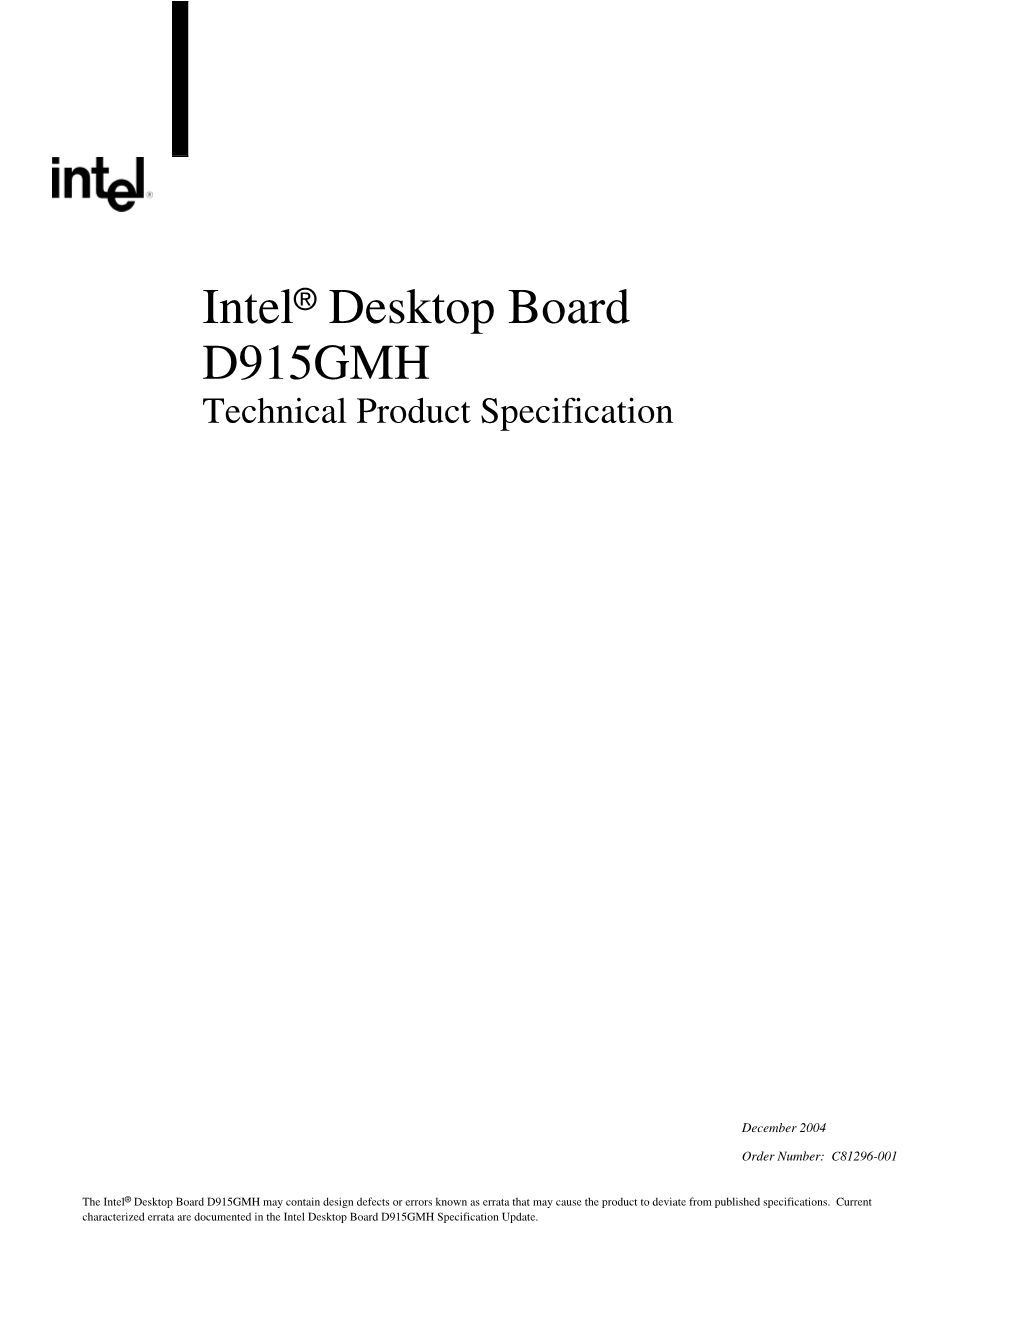 Intel® Desktop Board D915GMH Technical Product Specification